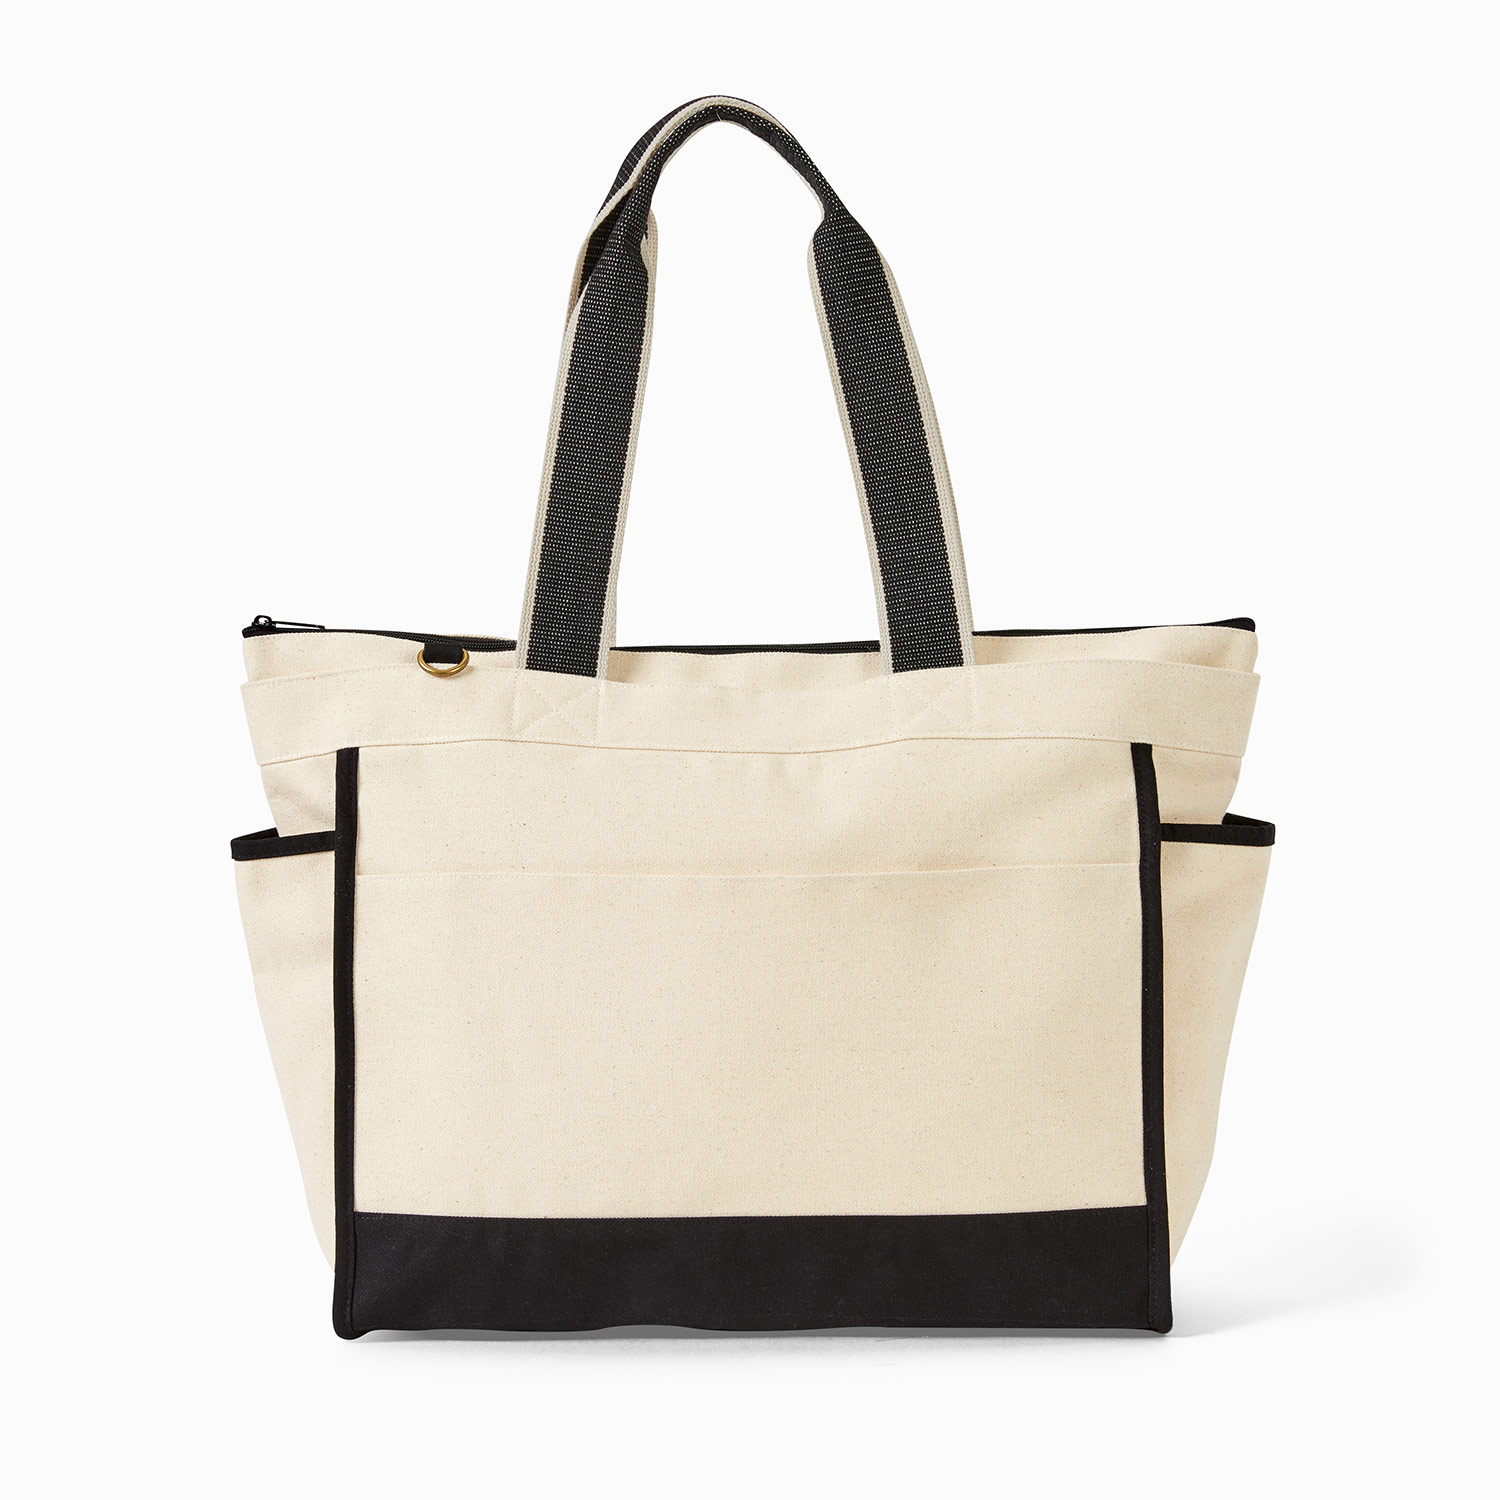 Handbags | Womens Handbags | Bags | Purses | River Island